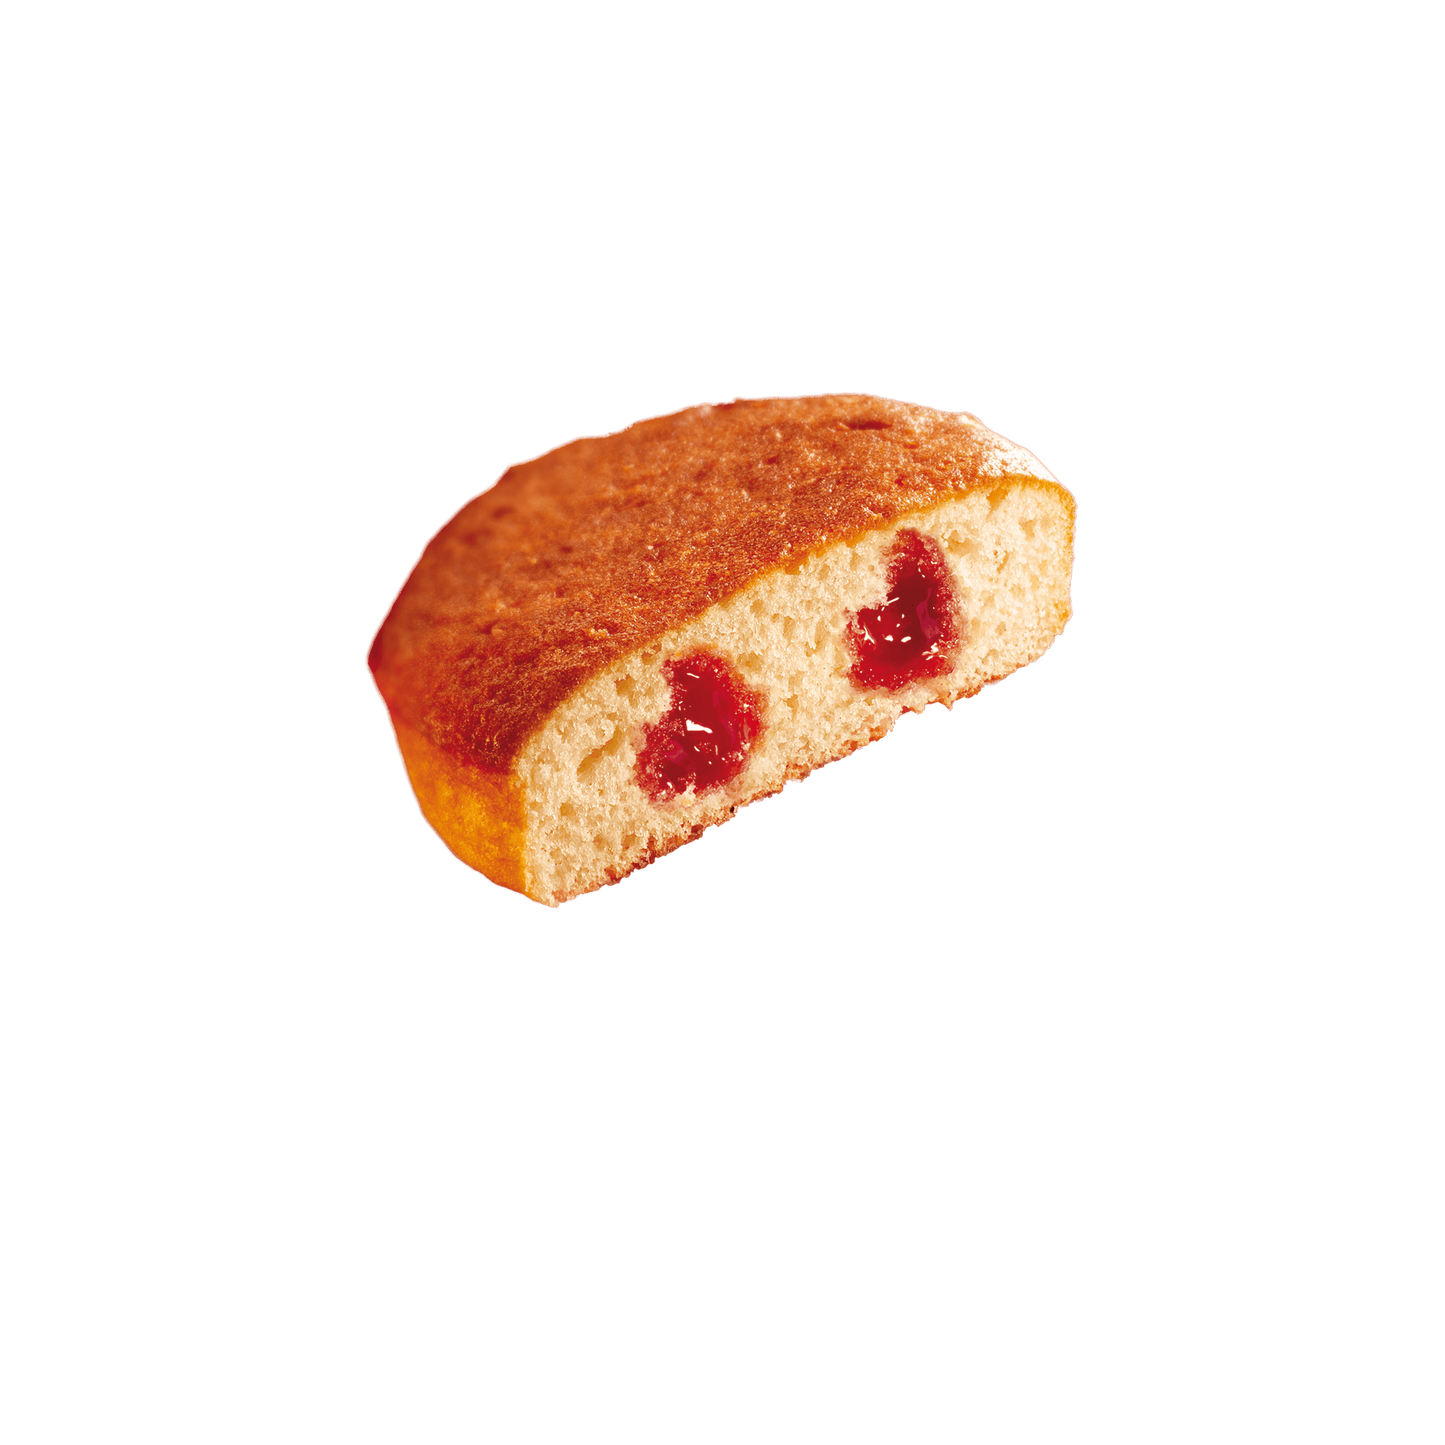 Ker Cadelac petit Guillou, Raspberry flavored cake (France)